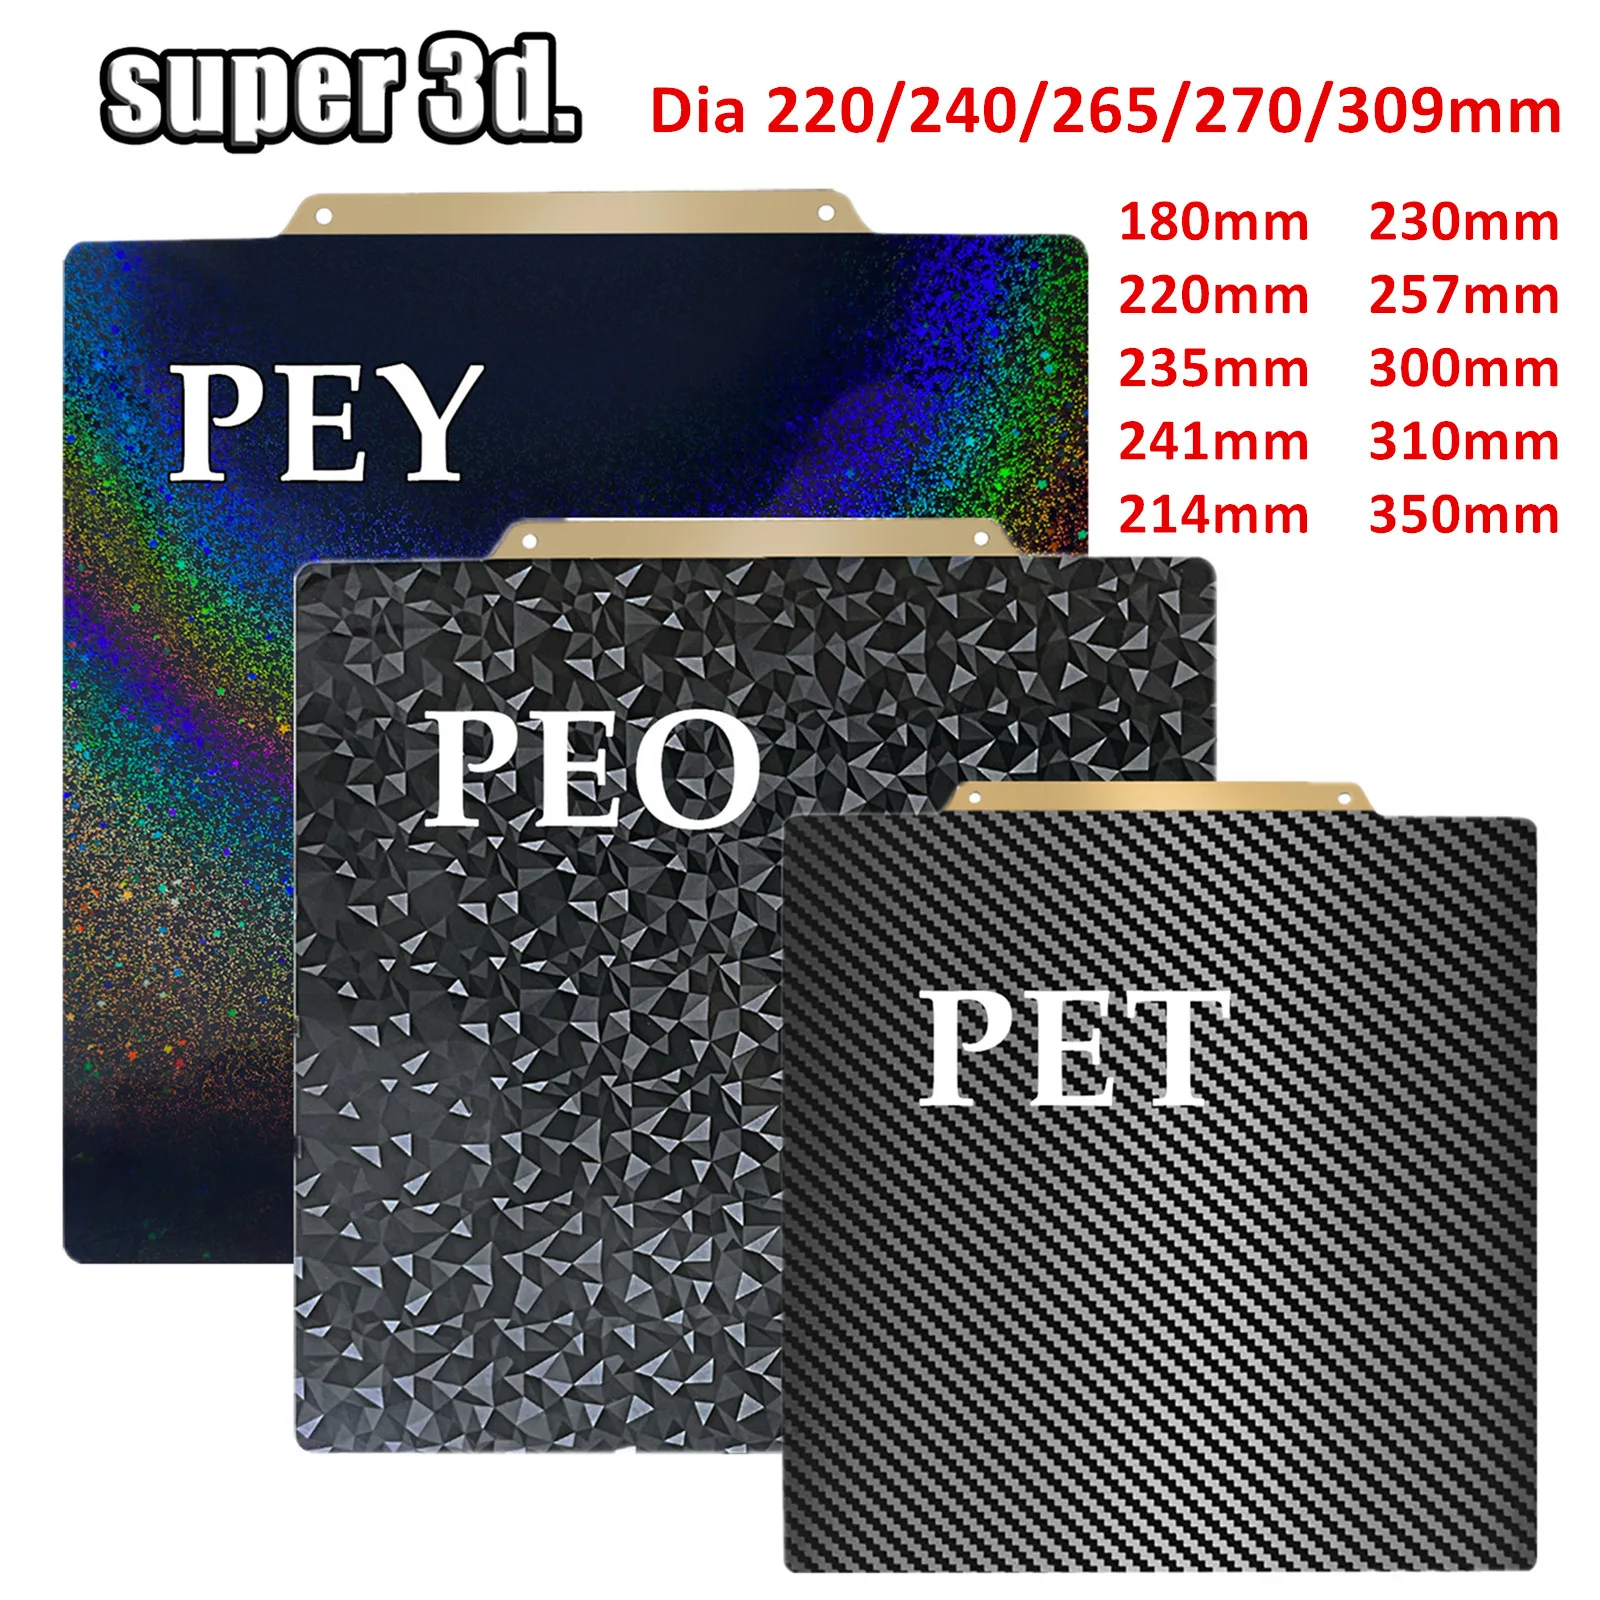 Square Round Plate PEO PET Mangetic Bed PEY Sheet For Creality K1 Max CR10 P1P Ender 3 Upgrade Prusa Voron Flsun PEO pei Sheet